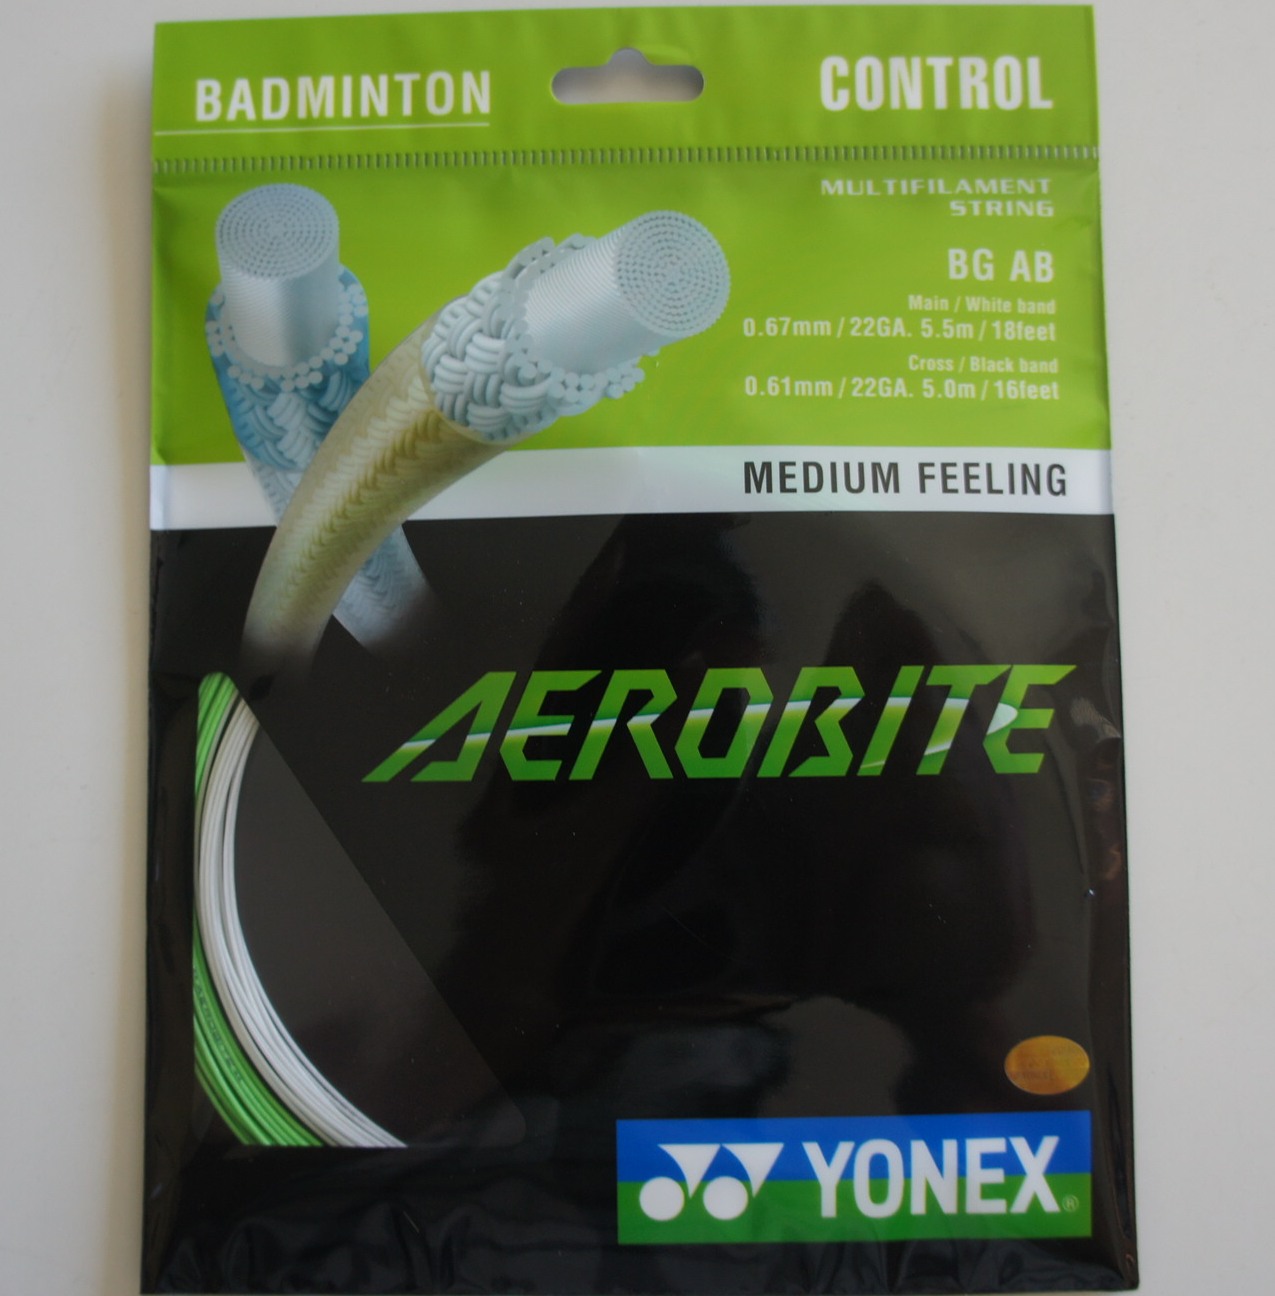 YONEX BG AB Aerobite Badminton String (10 Packs), Green/White